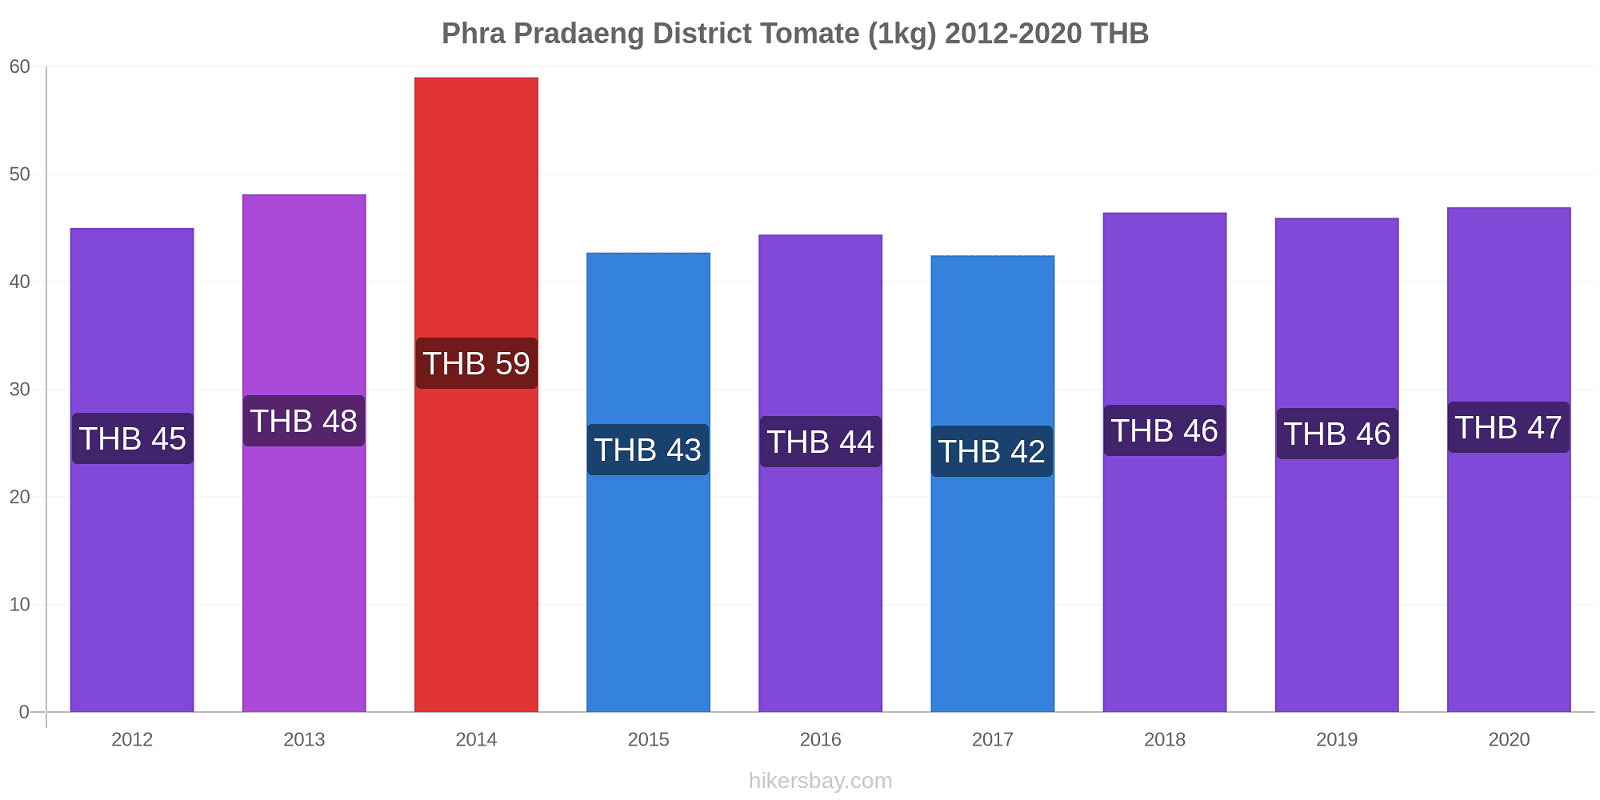 Phra Pradaeng District changements de prix Tomate (1kg) hikersbay.com